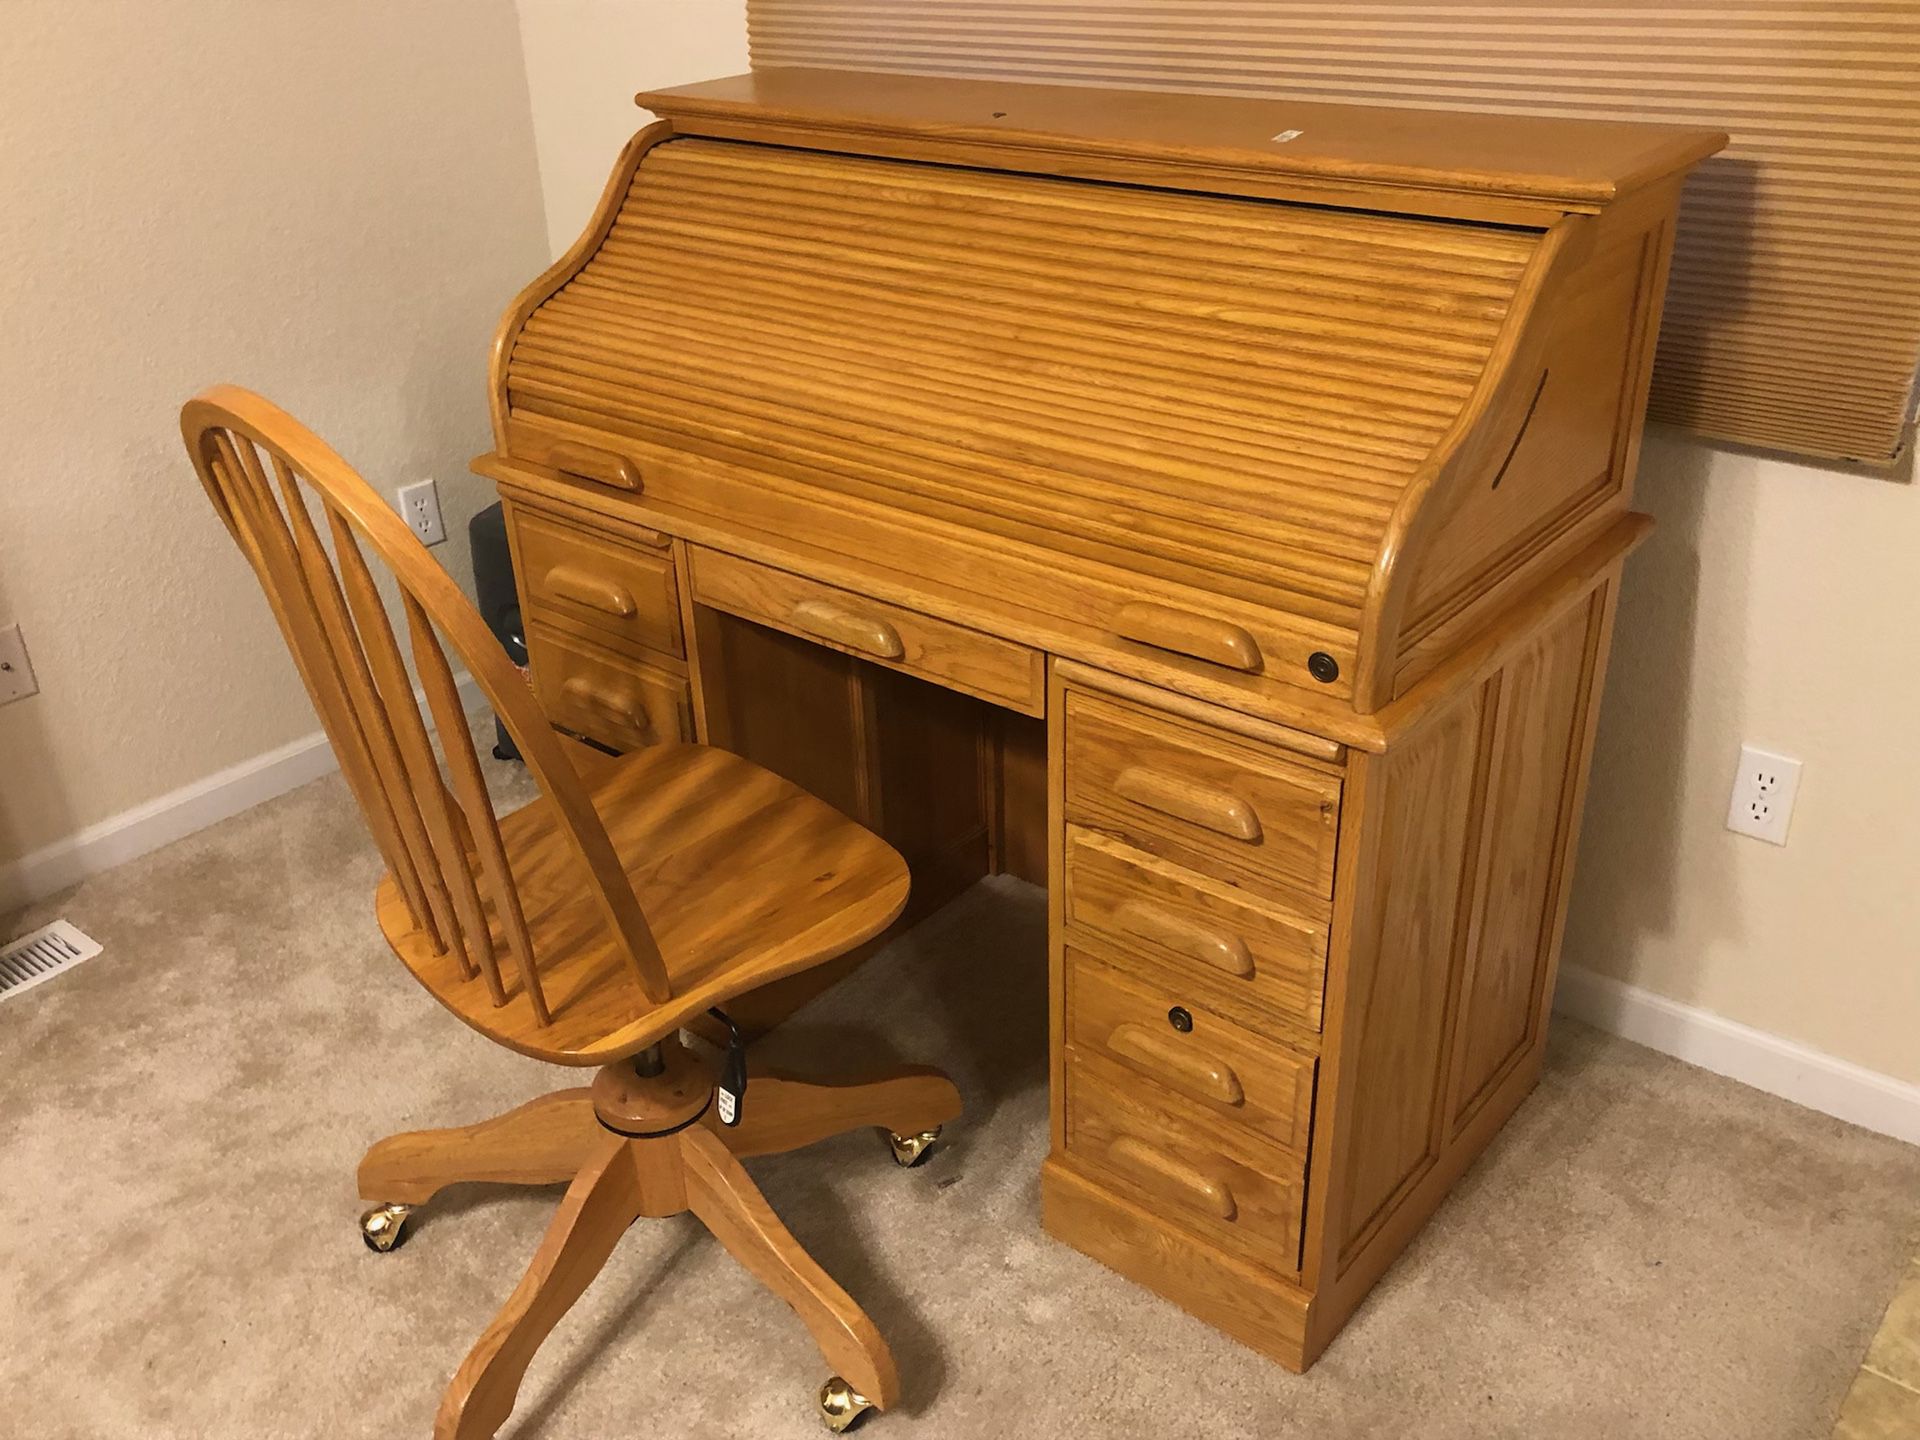 Deluxe oak roll top desk in excellent condition